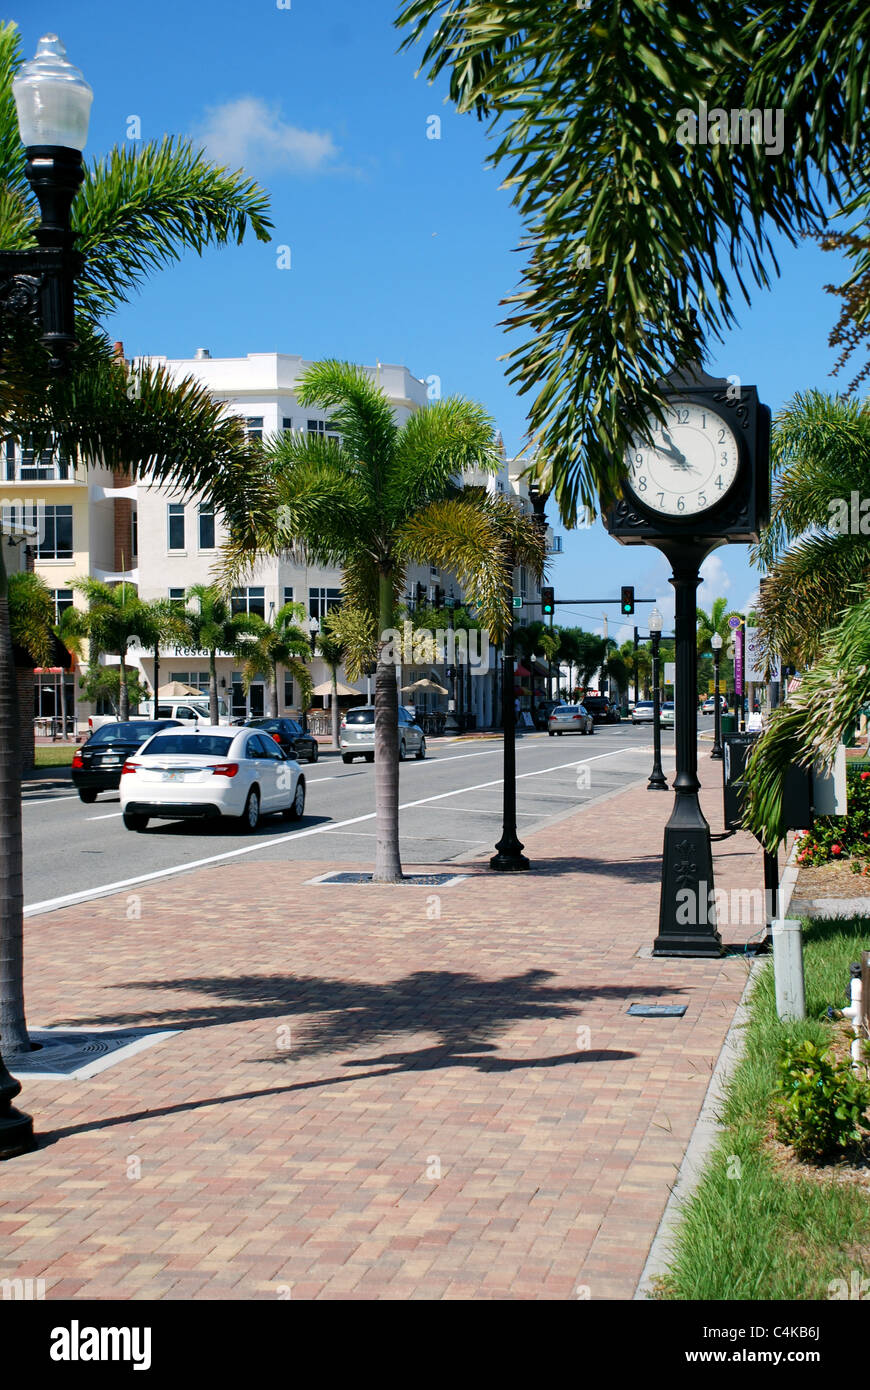 Downtown Punta Gorda, FL. Punta Gorda is the County Seat of Charlotte County. Stock Photo